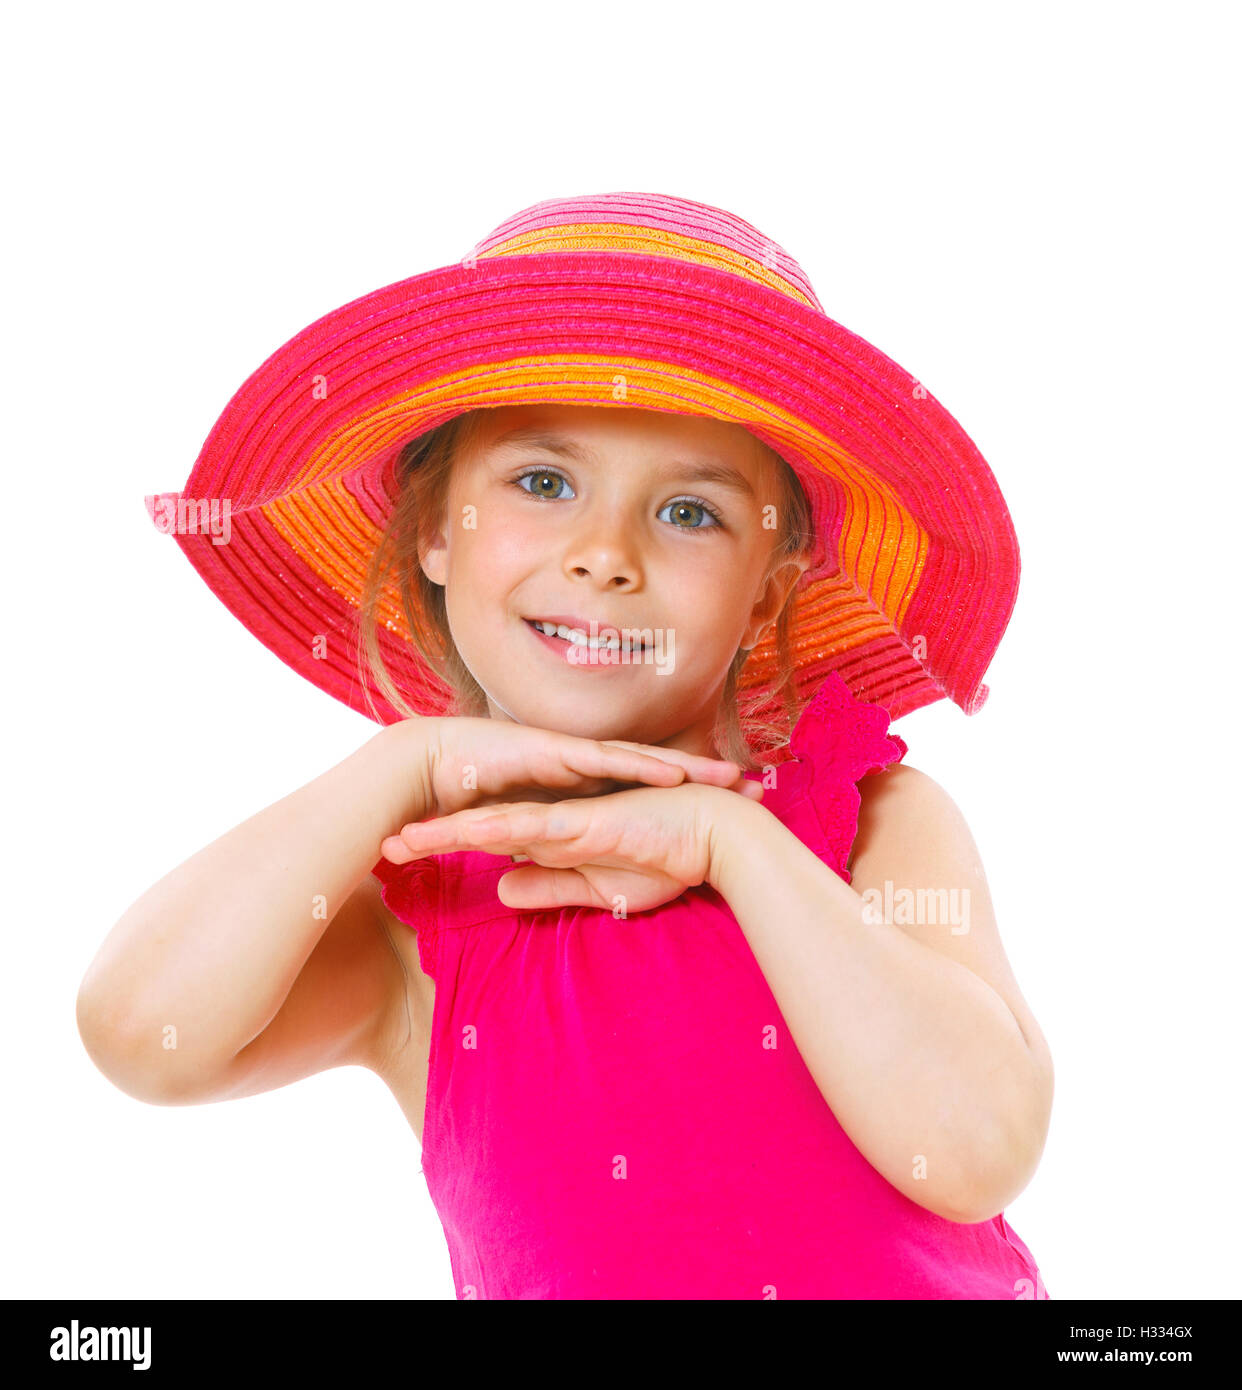 Little girl wearing a hat. Stock Photo